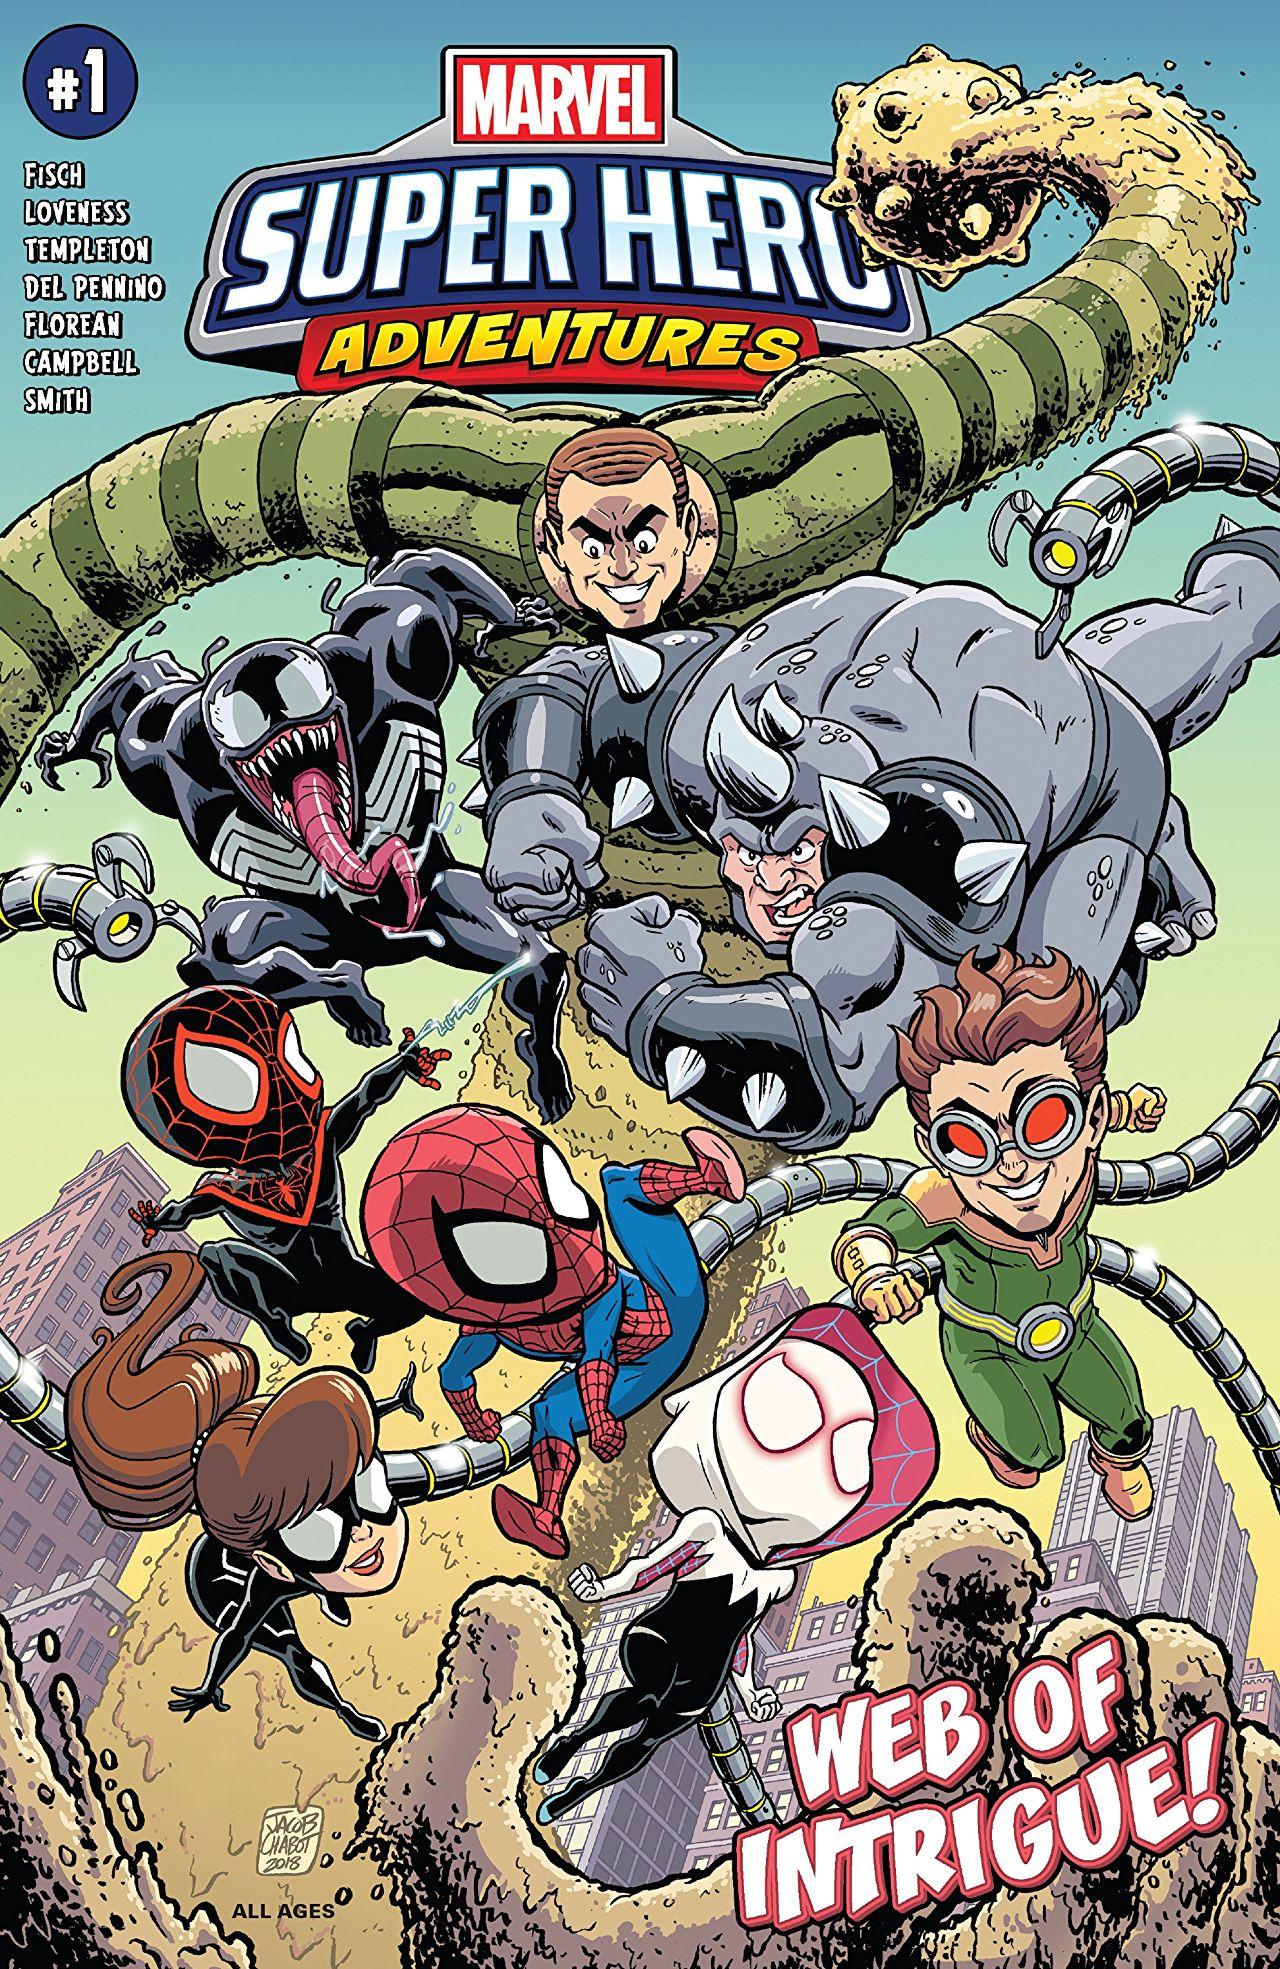 Marvel Super Hero Adventures: Spider-Man - Web of Intrigue Vol. 1 #1